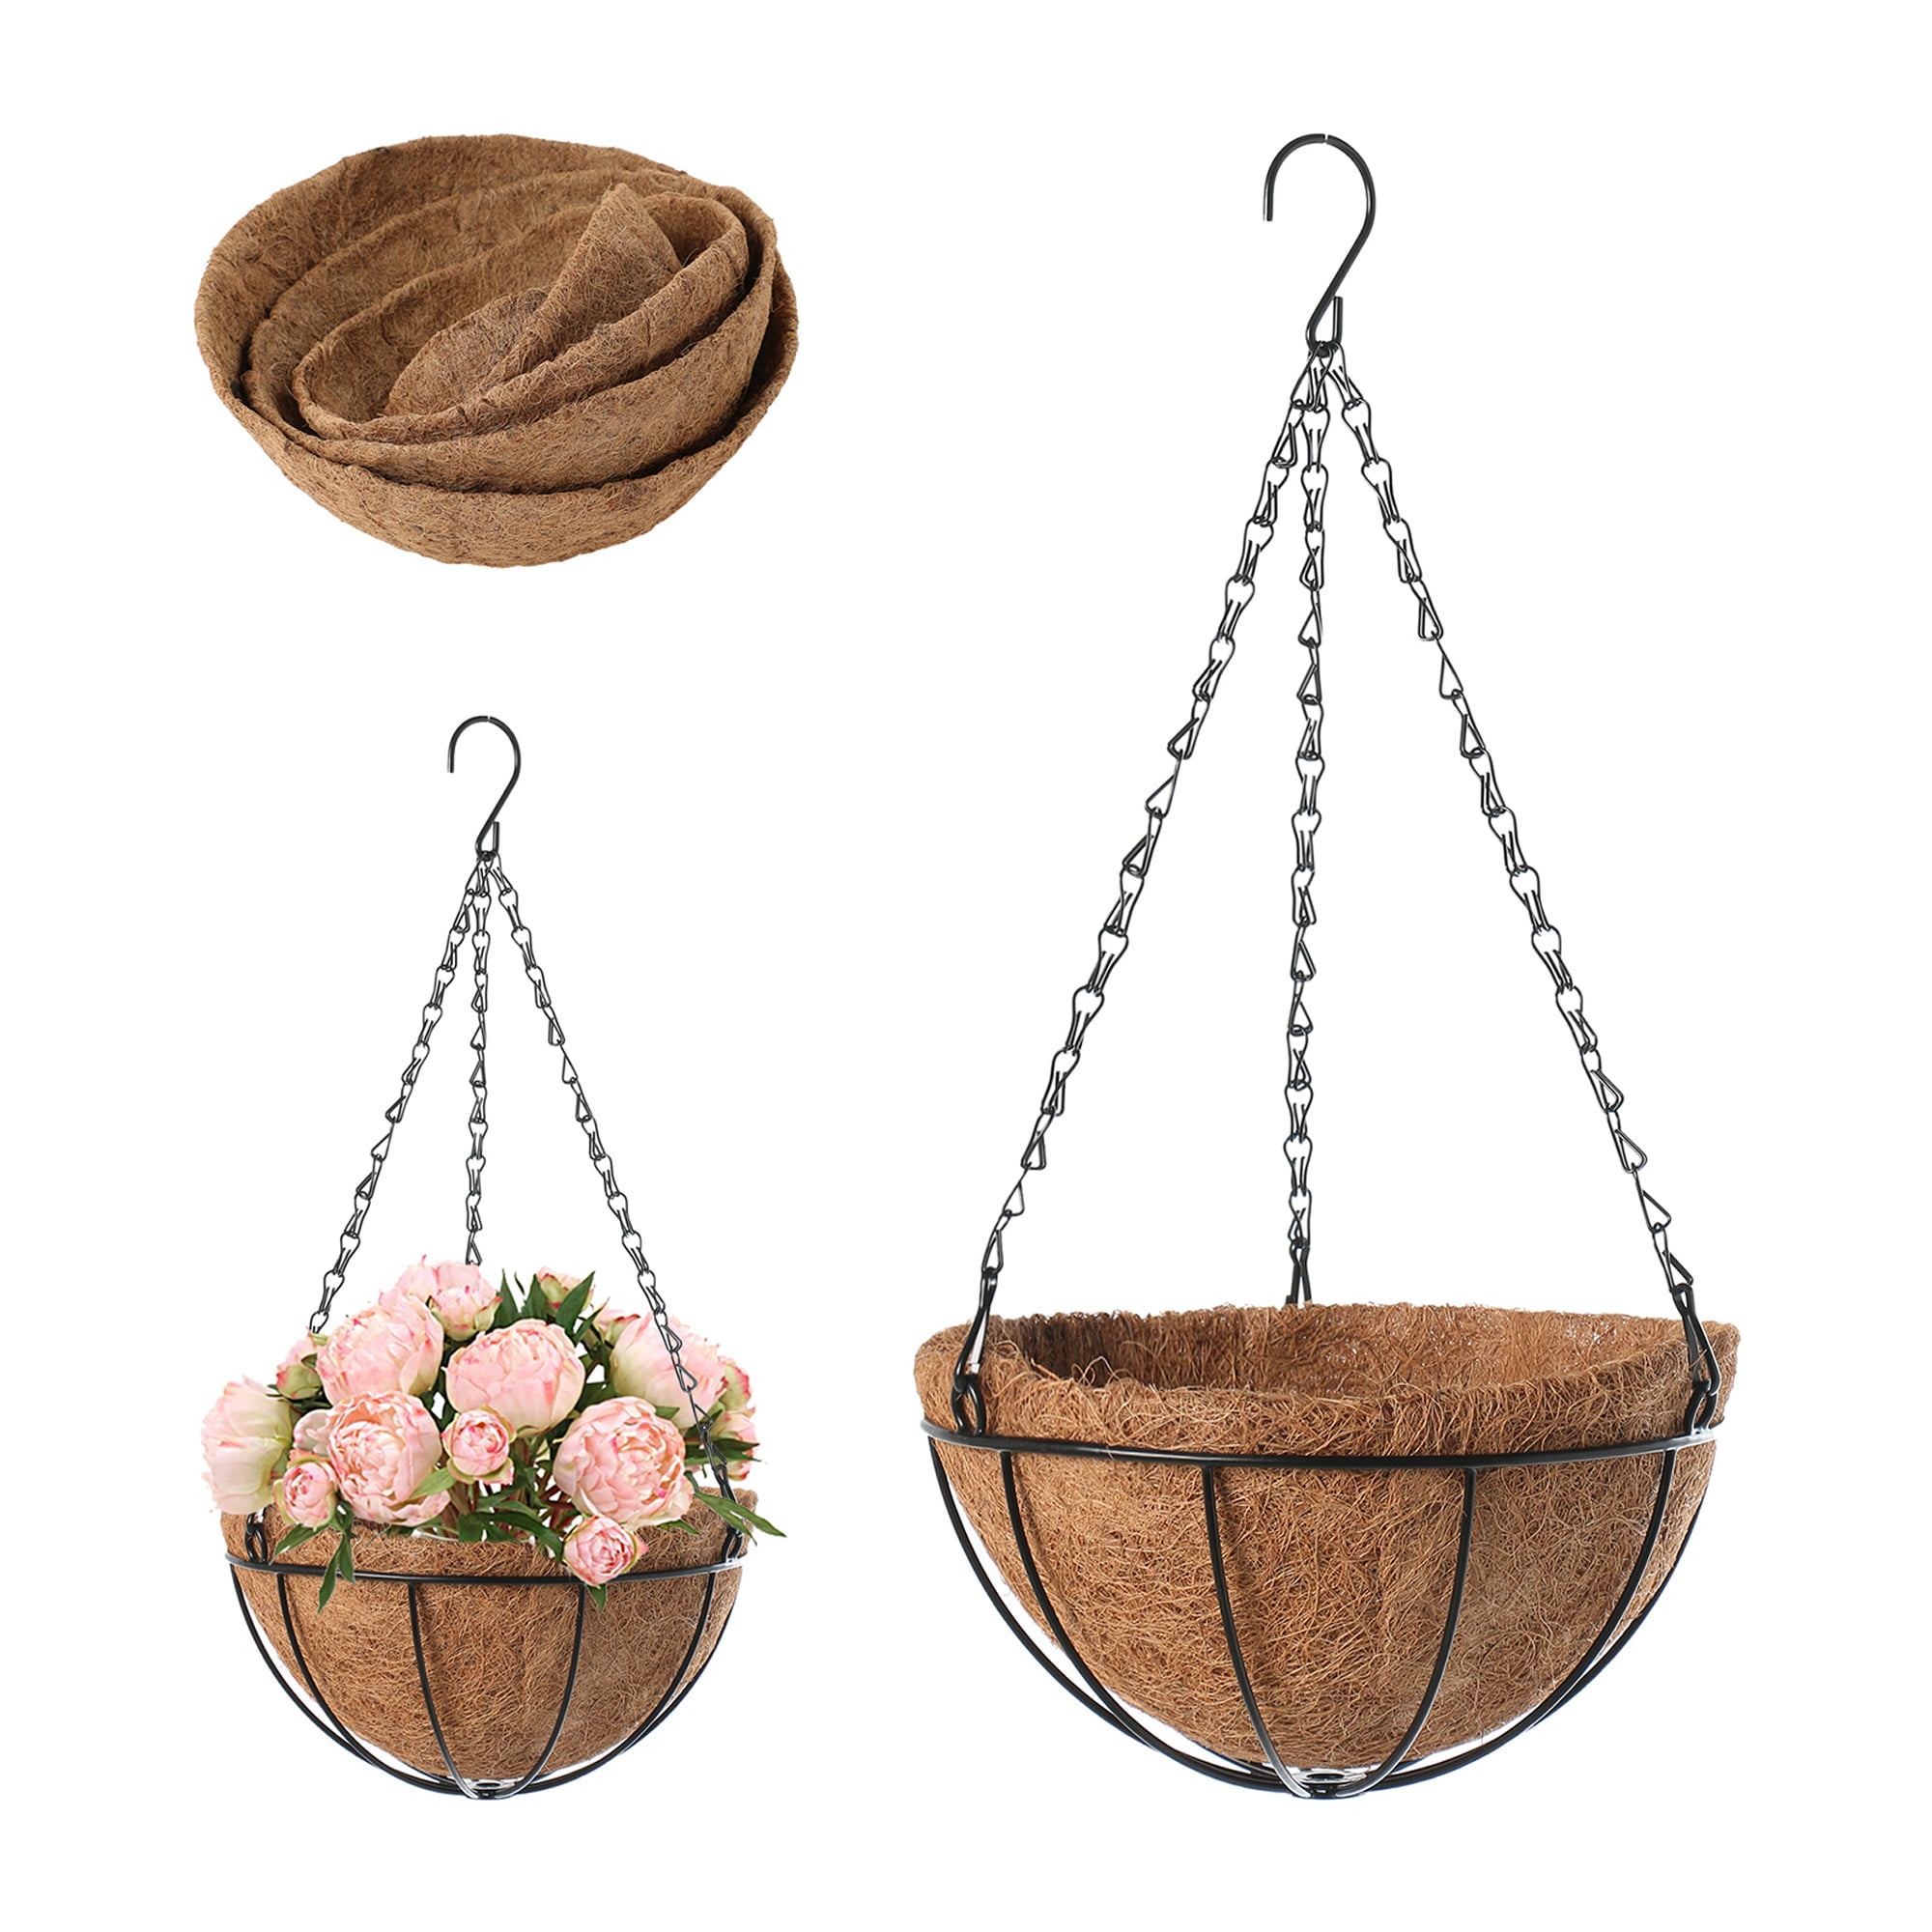 Details about   Hanging Coconut Vegetable Flower Pot Basket Liners Planter Garden Decor Iron Art 